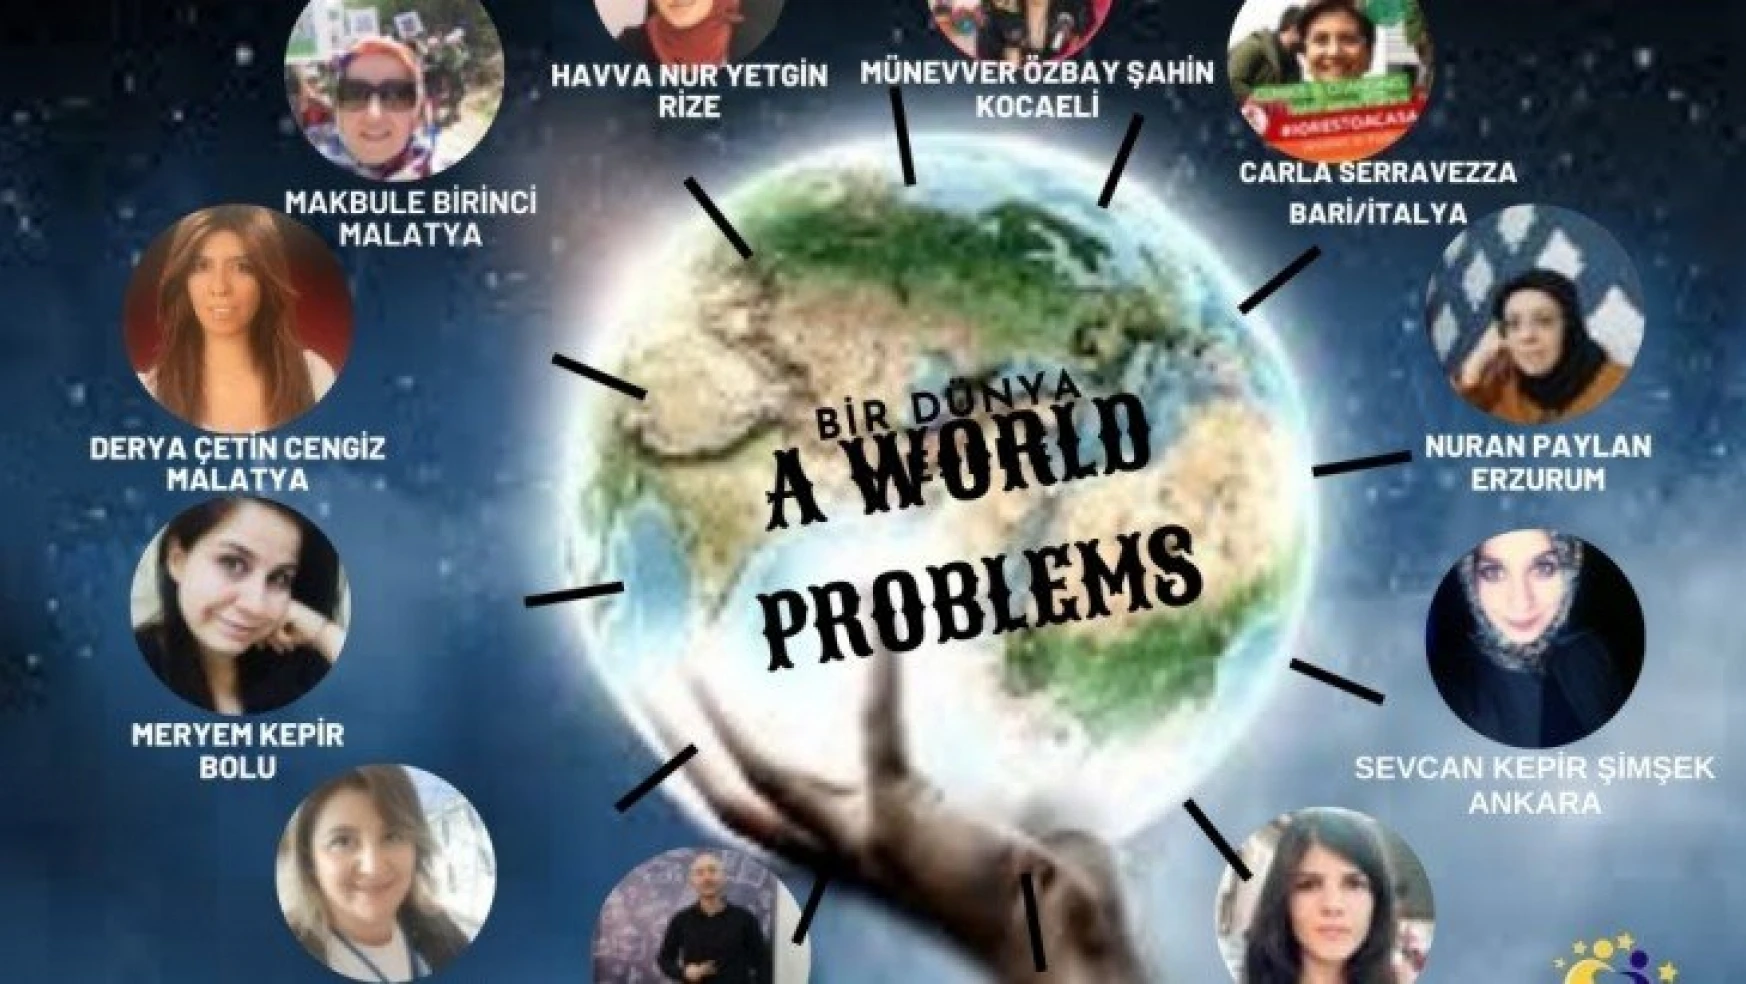 Bir Dünya Mesele (A World Problems)